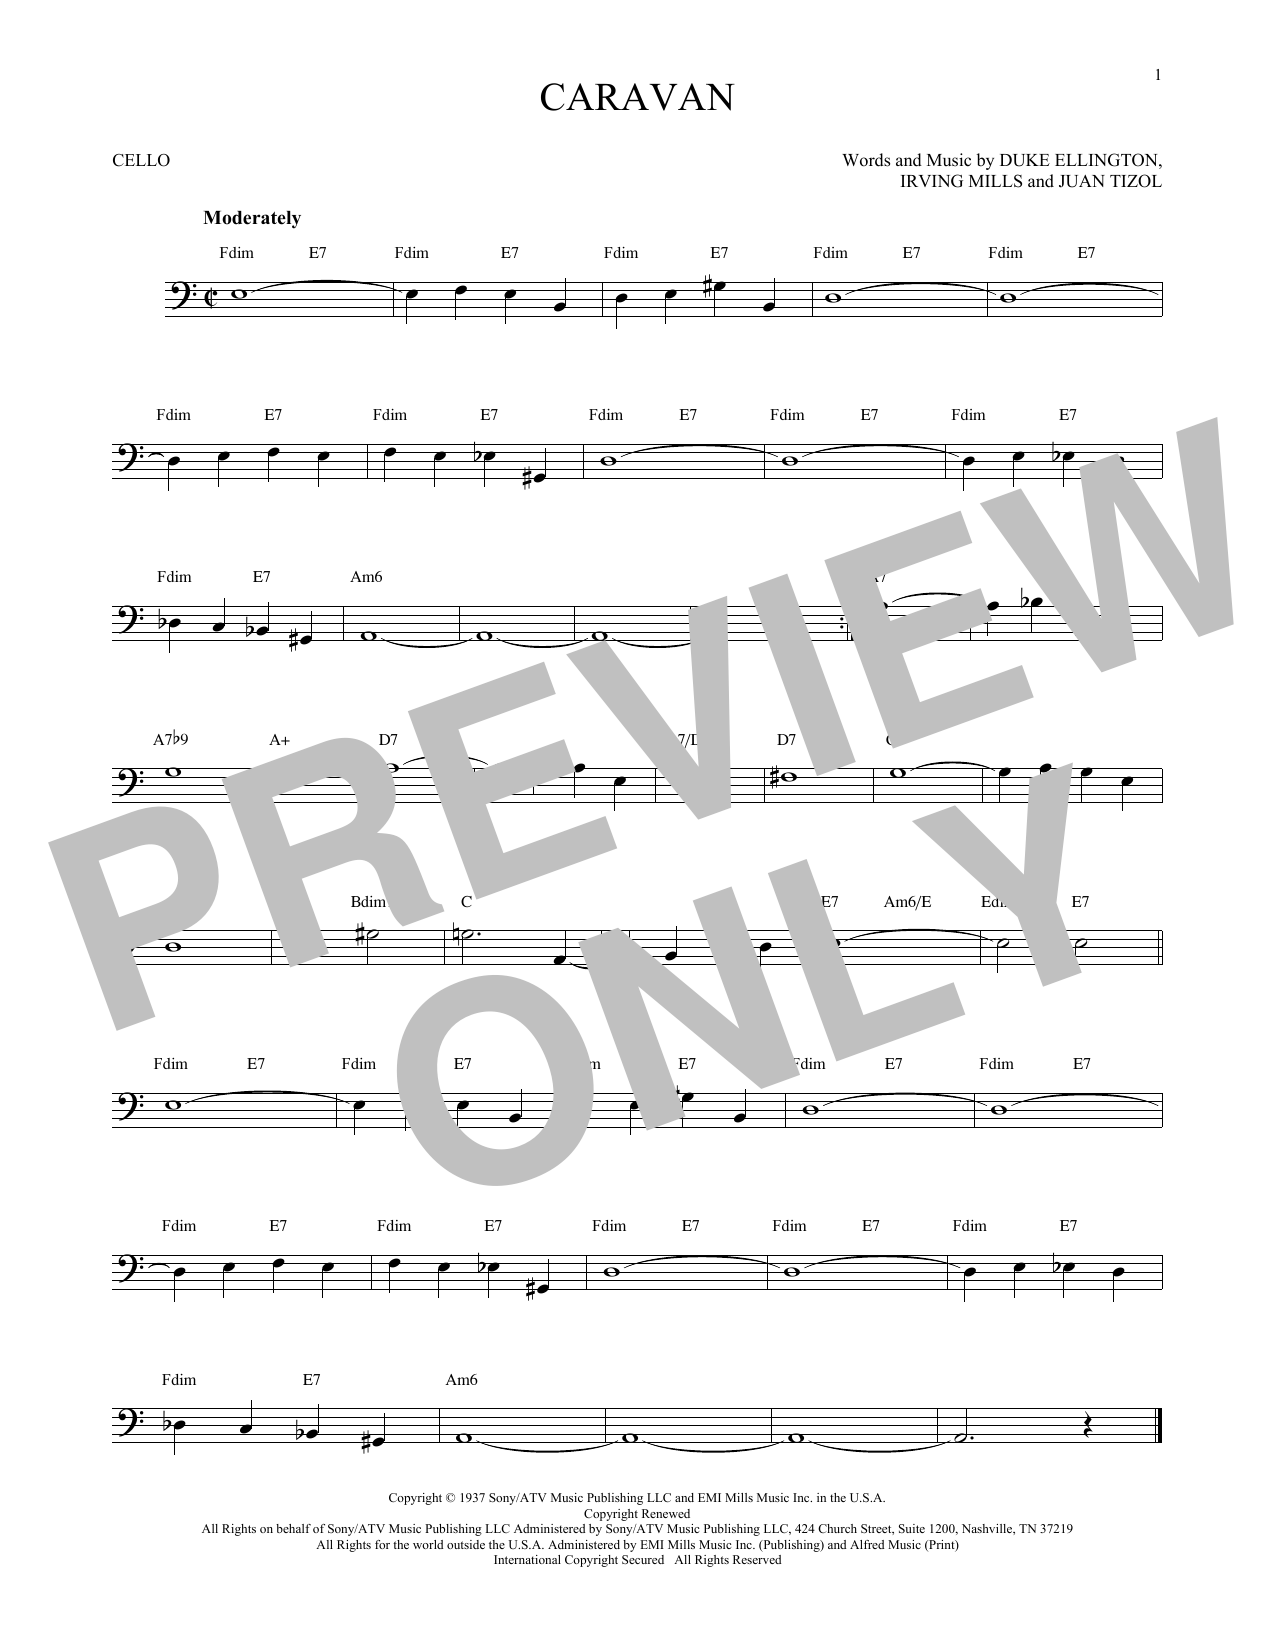 Juan Tizol & Duke Ellington Caravan Sheet Music Notes & Chords for Clarinet - Download or Print PDF